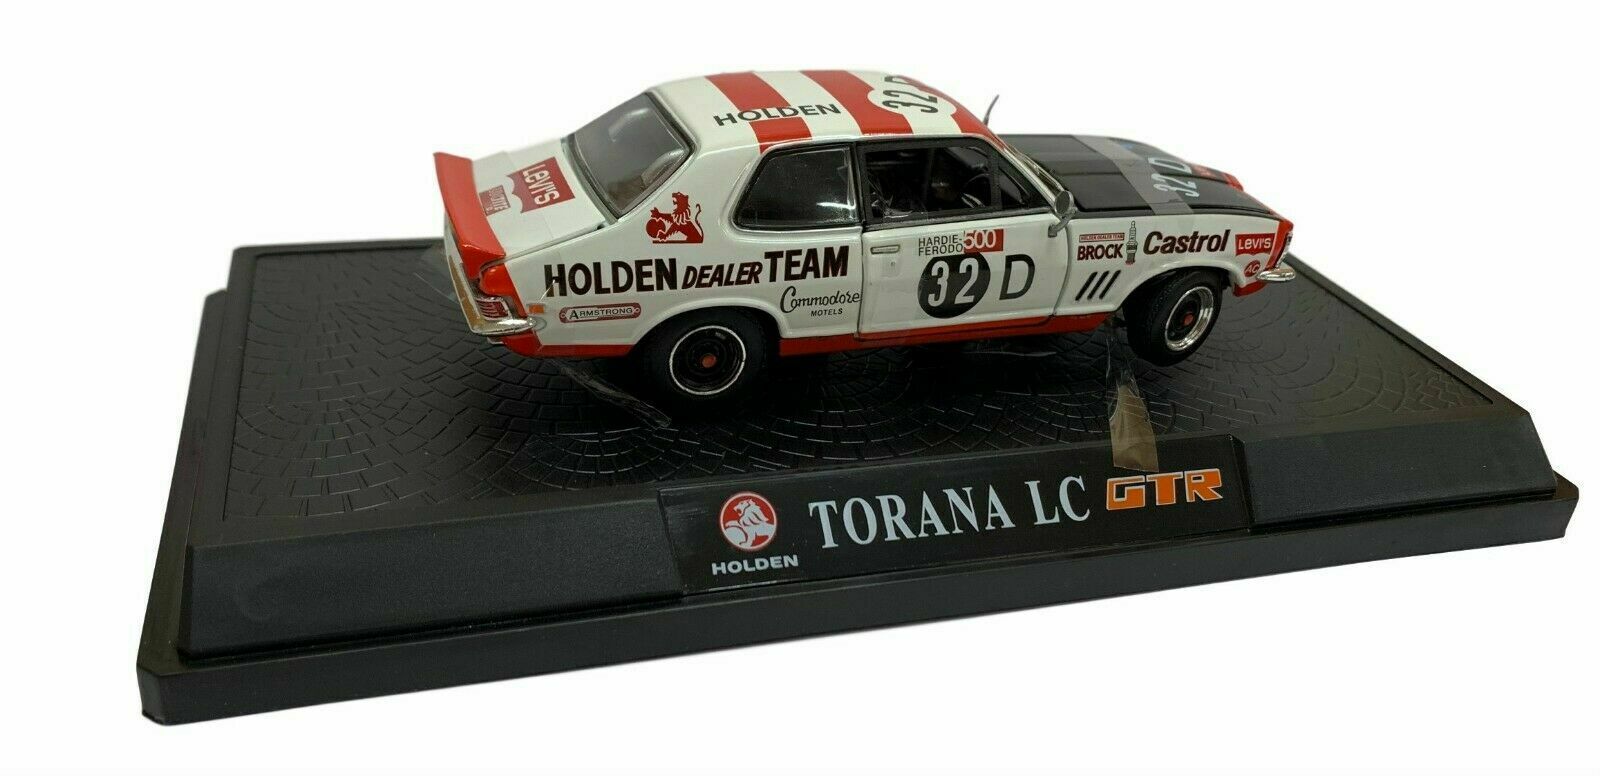 Holden Torana LC GTR XU1 Diecast Model Car 1:32 - Peter Brock 32D Racing Series